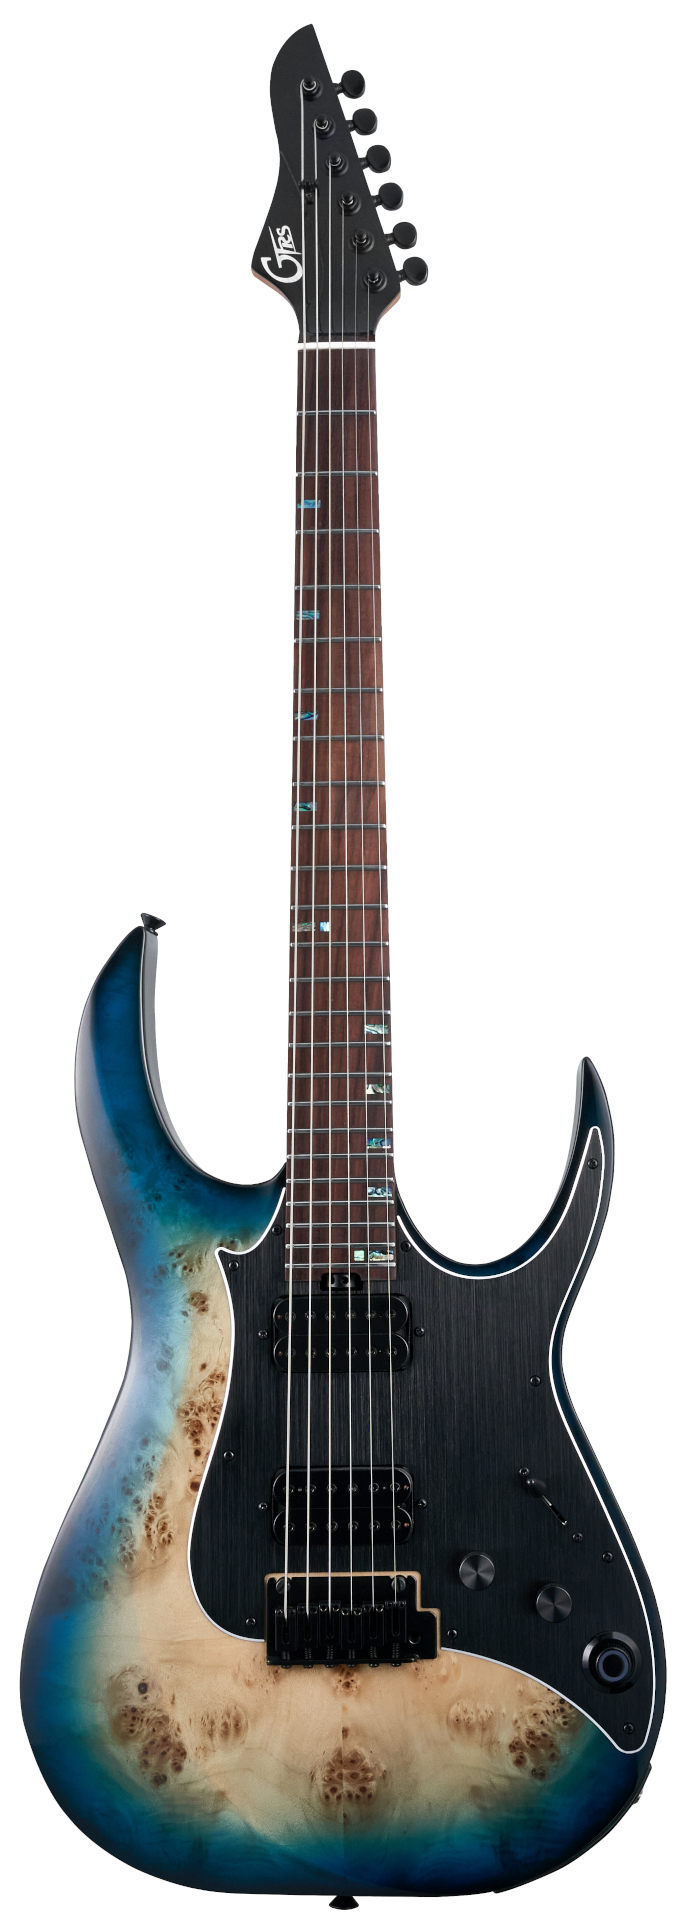 GTRS Modern 810 Intelligent Guitar (M810) - Blue Burst